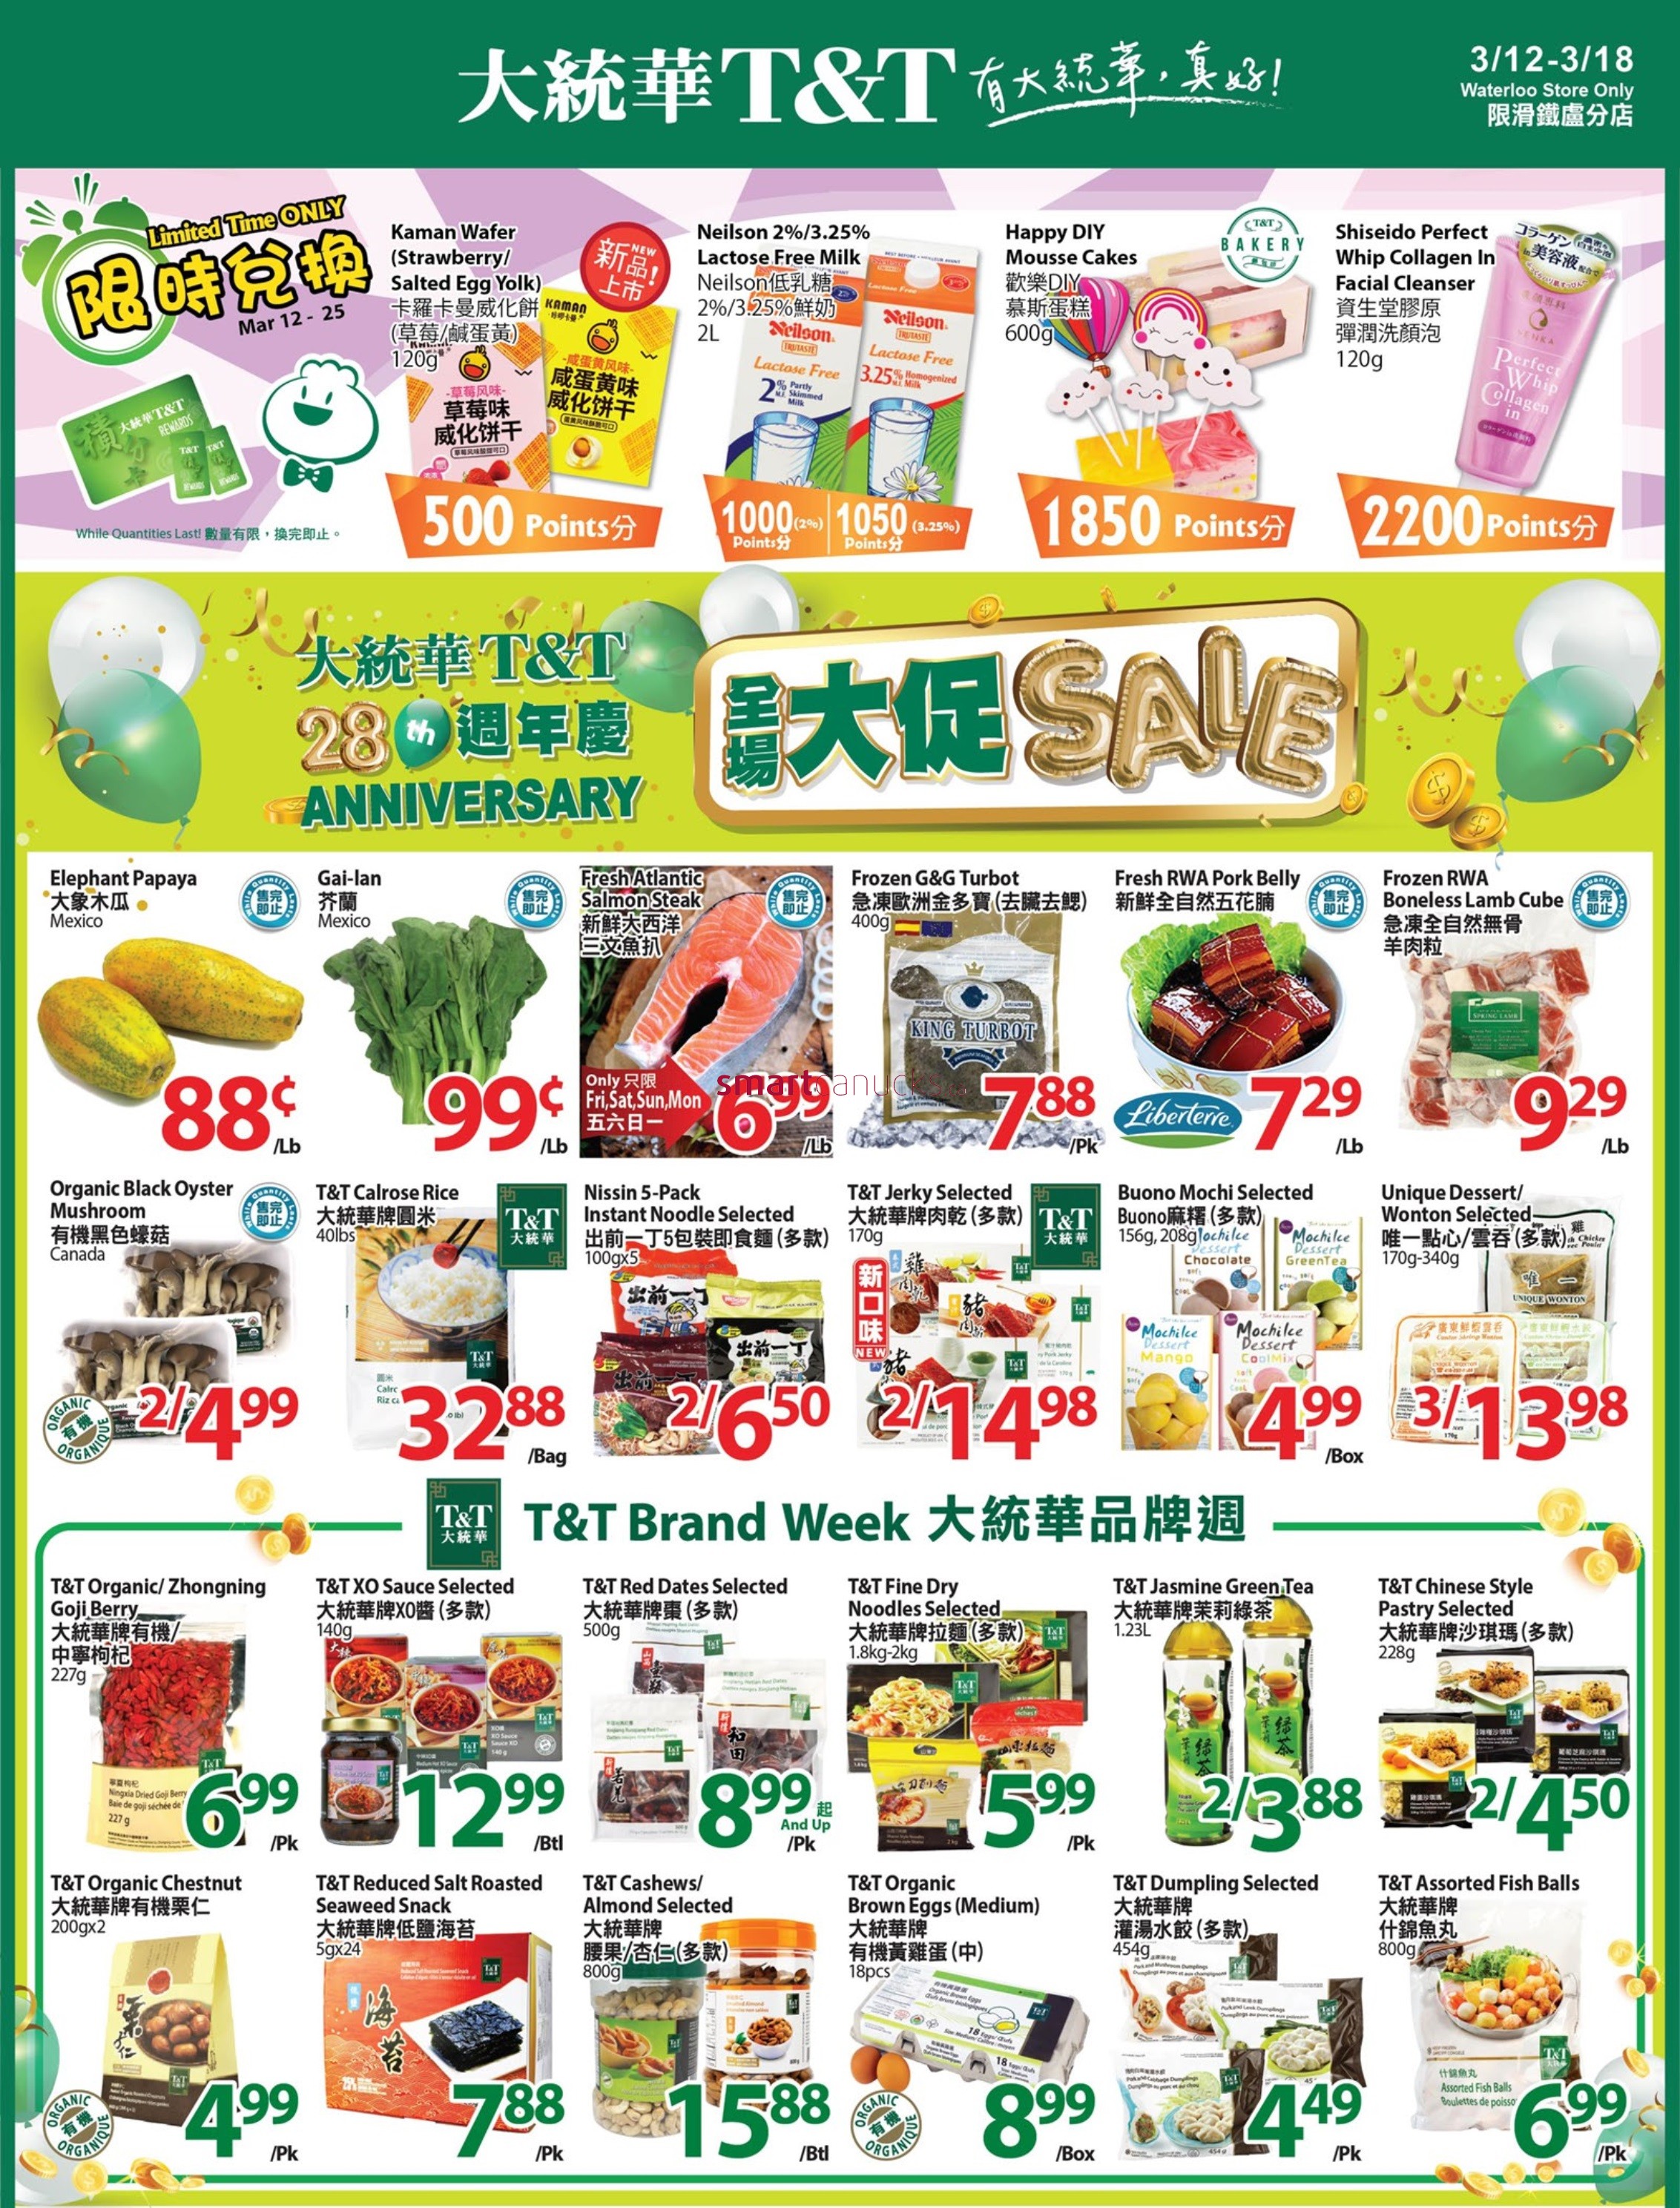 tt-supermarket-waterloo-flyer-march-12-to-18-1.jpg